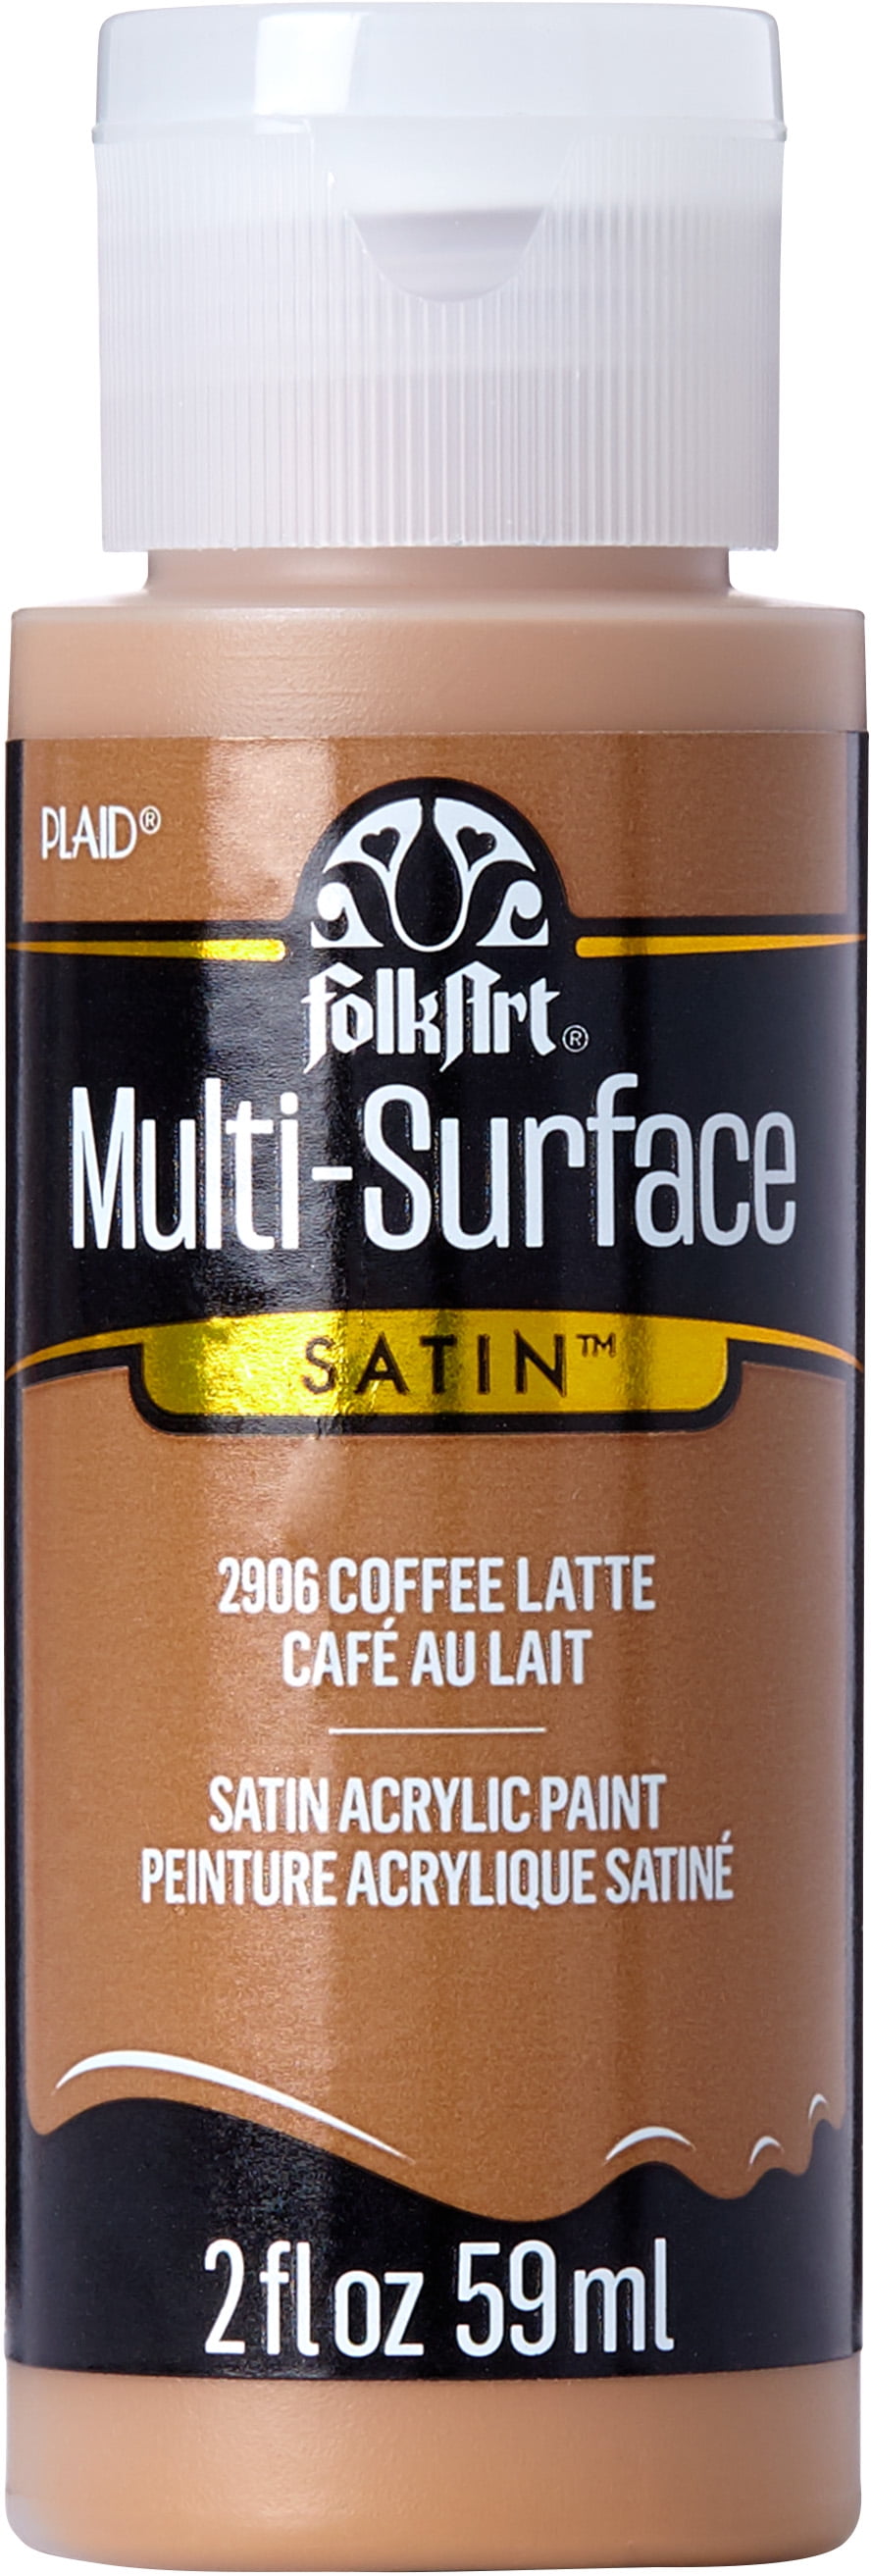 FolkArt Multi-Surface Acrylic Craft Paint, Satin Finish, Coffee Latte, 2 fl oz